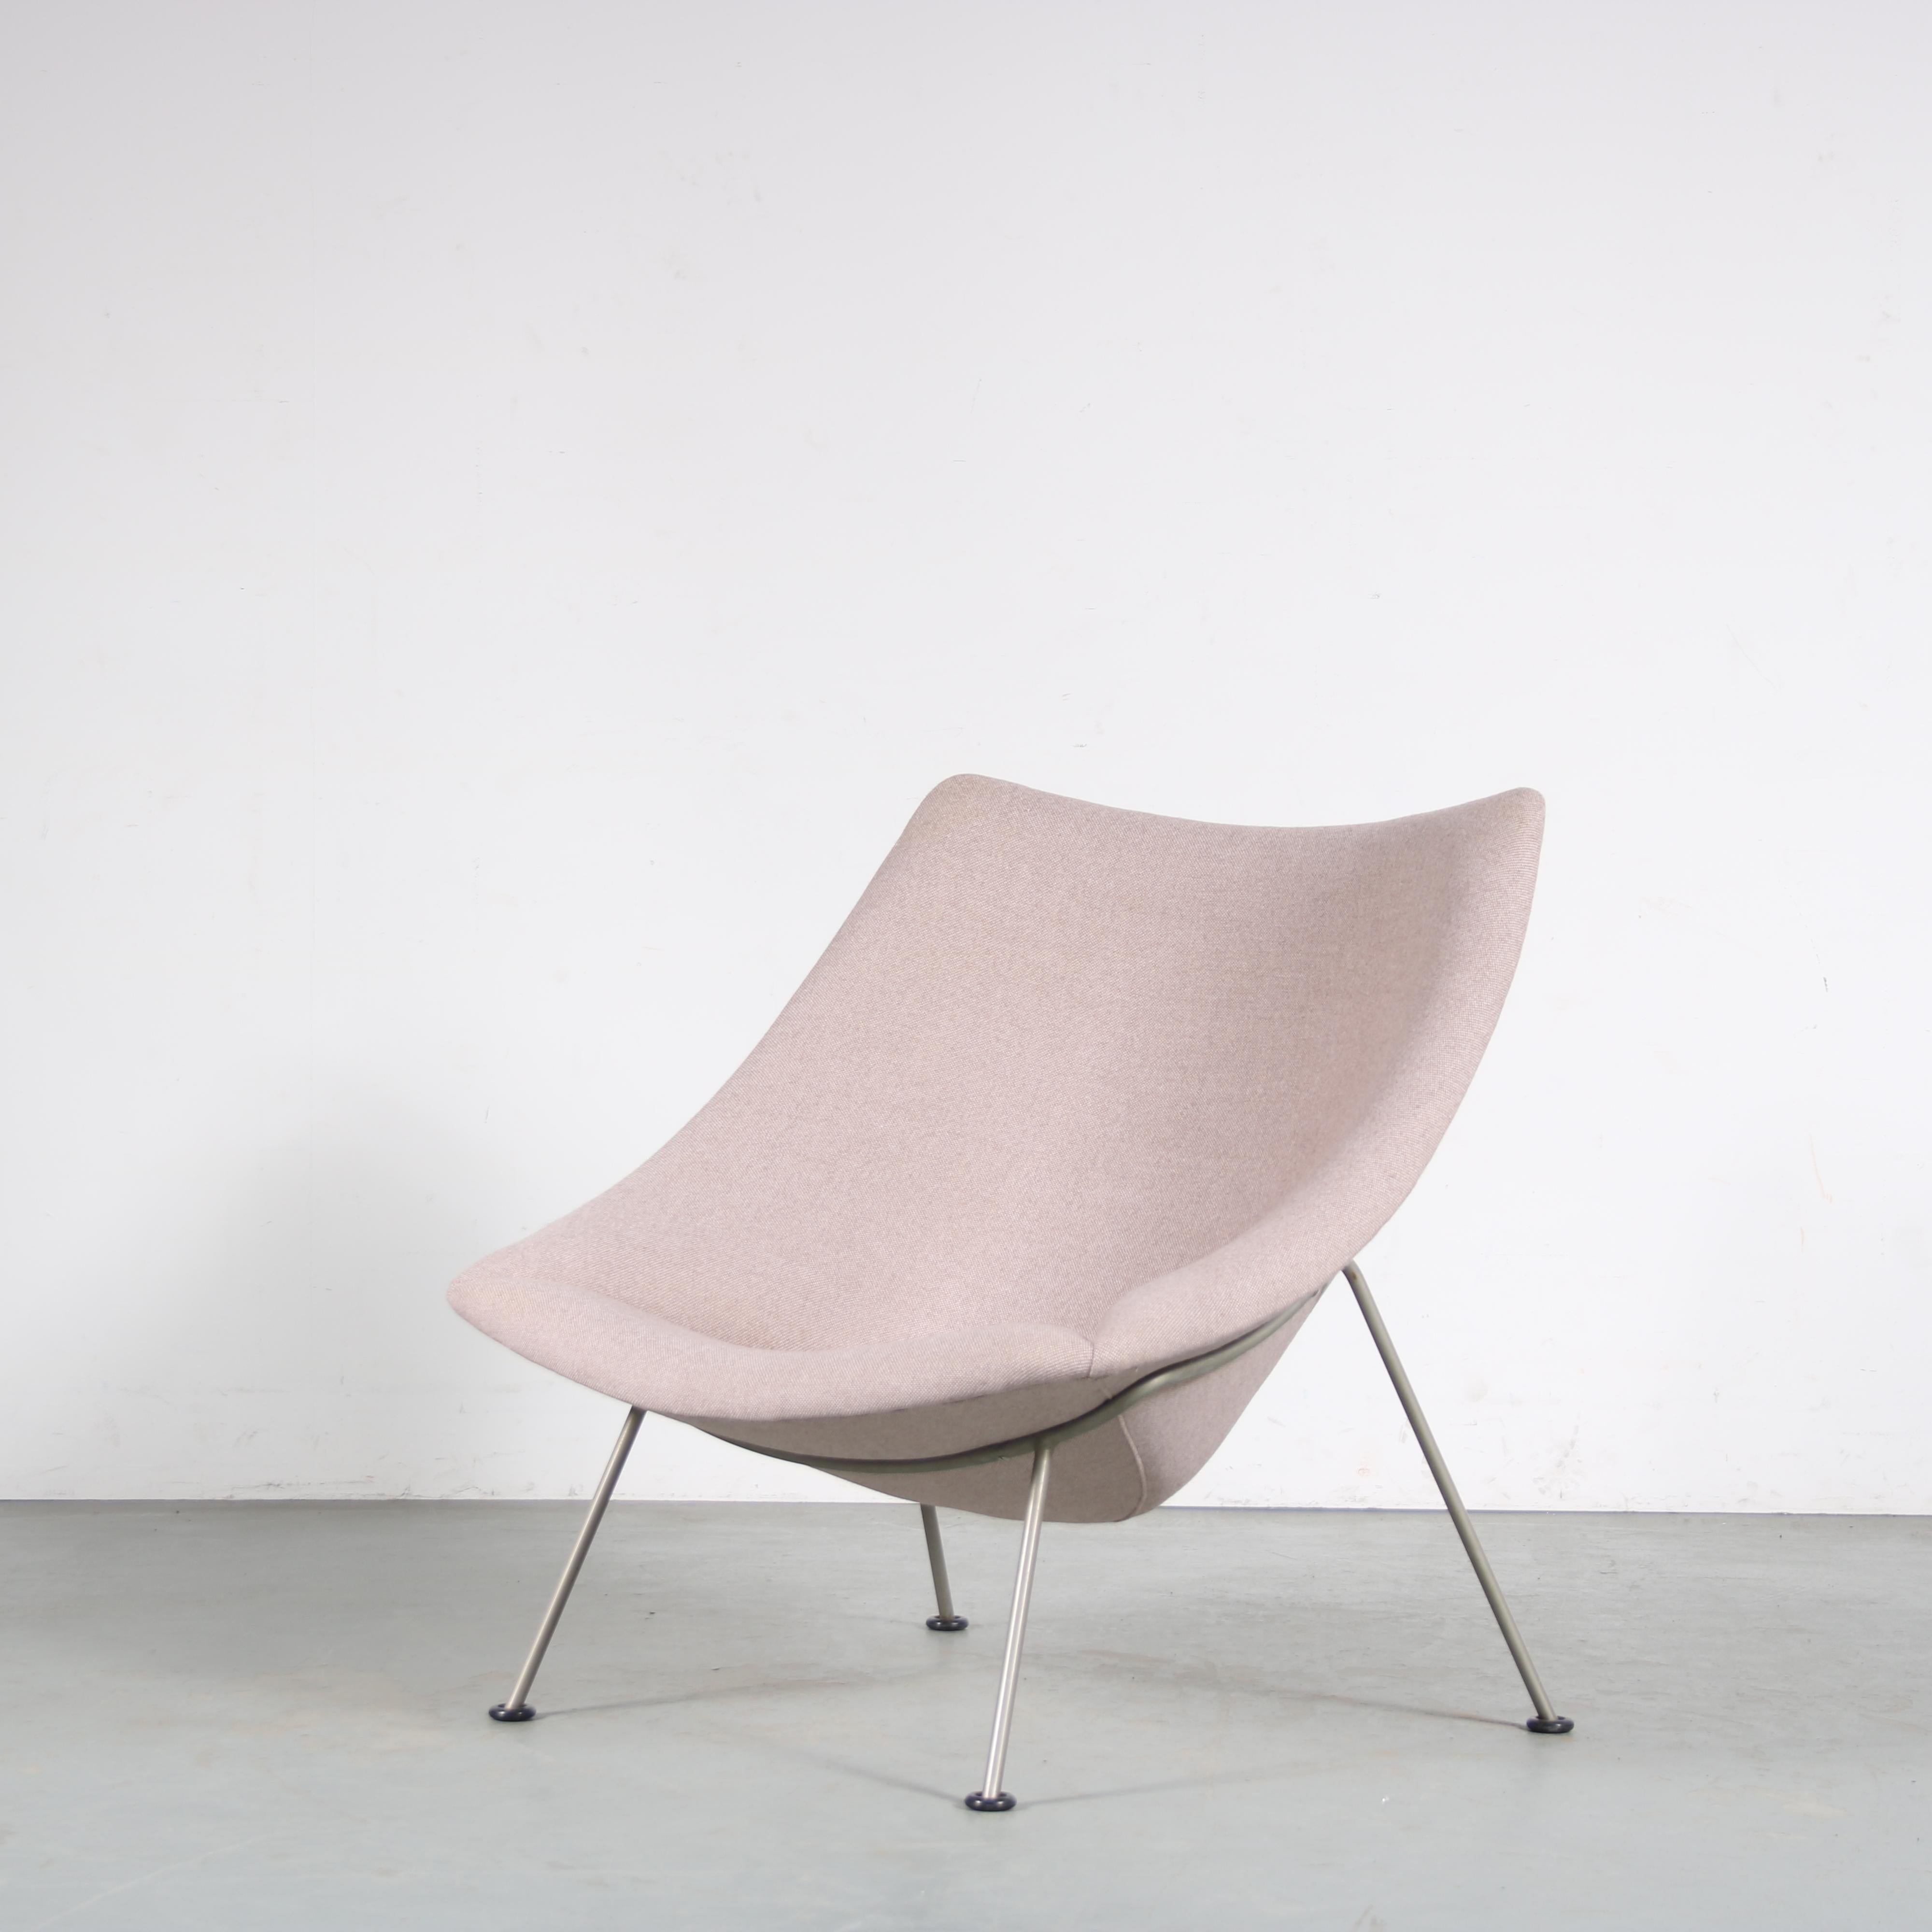 Dutch Pierre Paulin “Oyster” Chair and Ottoman for Artifort, Netherlands 1950